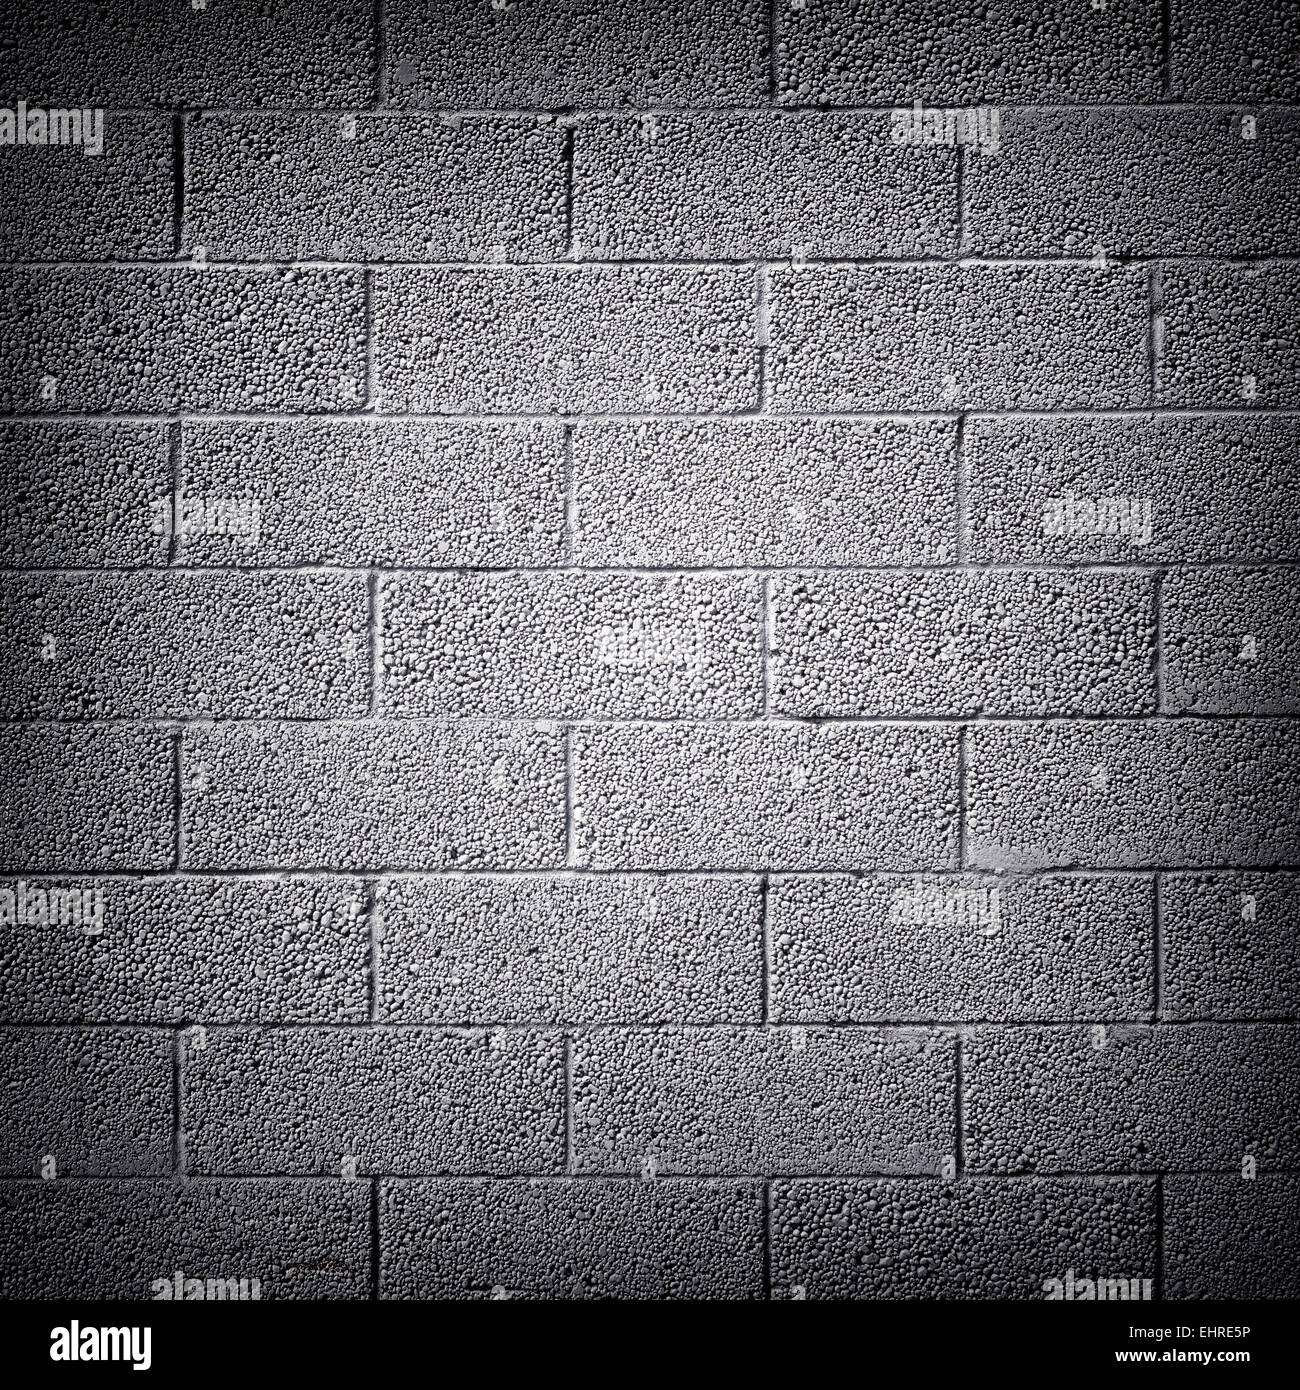 Cinder block wall background, brick texture Stock Photo